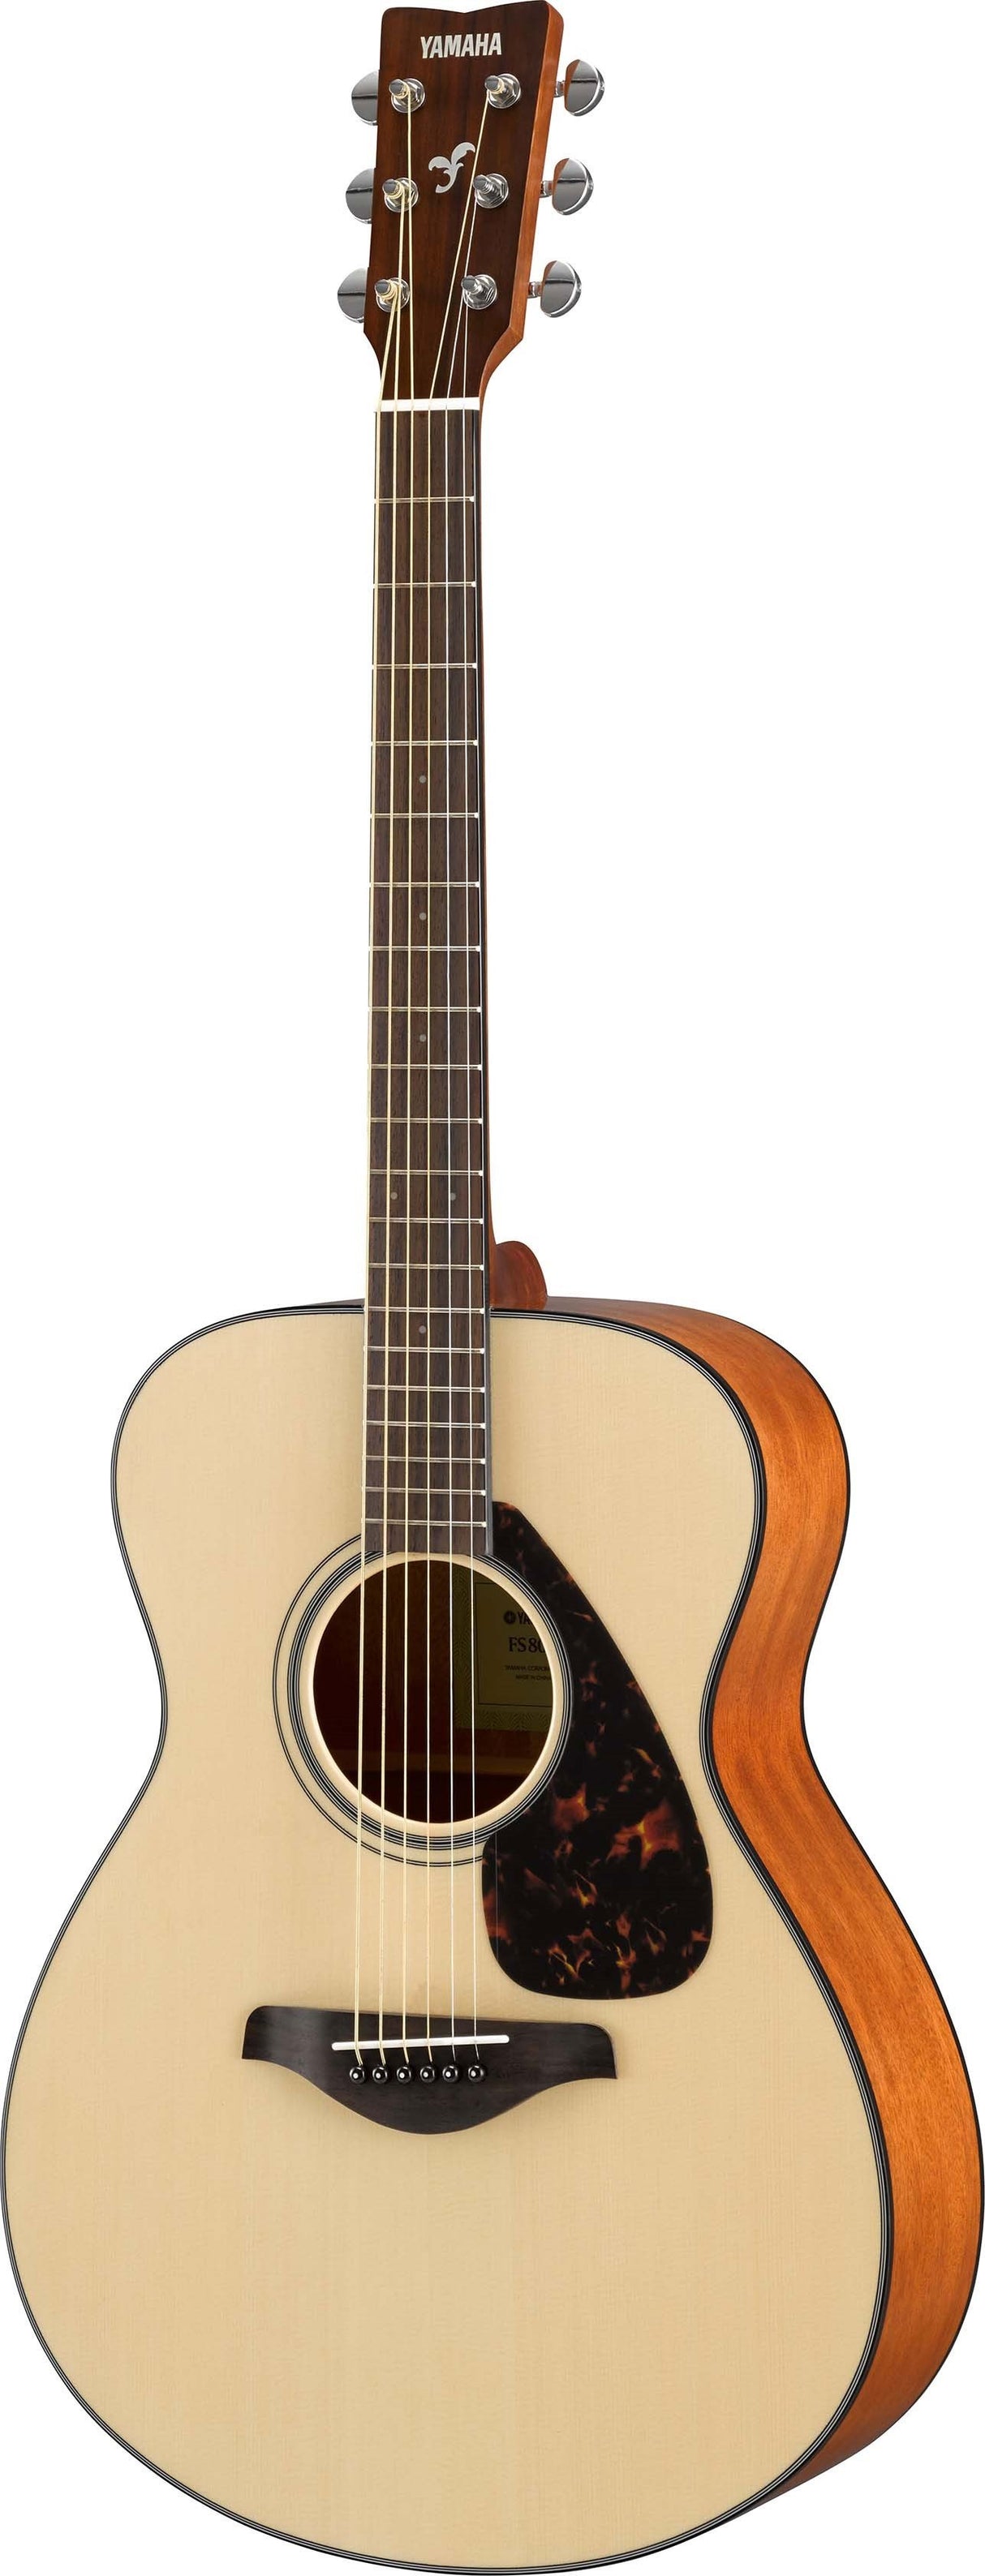 Yamaha FS800 Small Body Dreadnought Acoustic Guitar, Natural